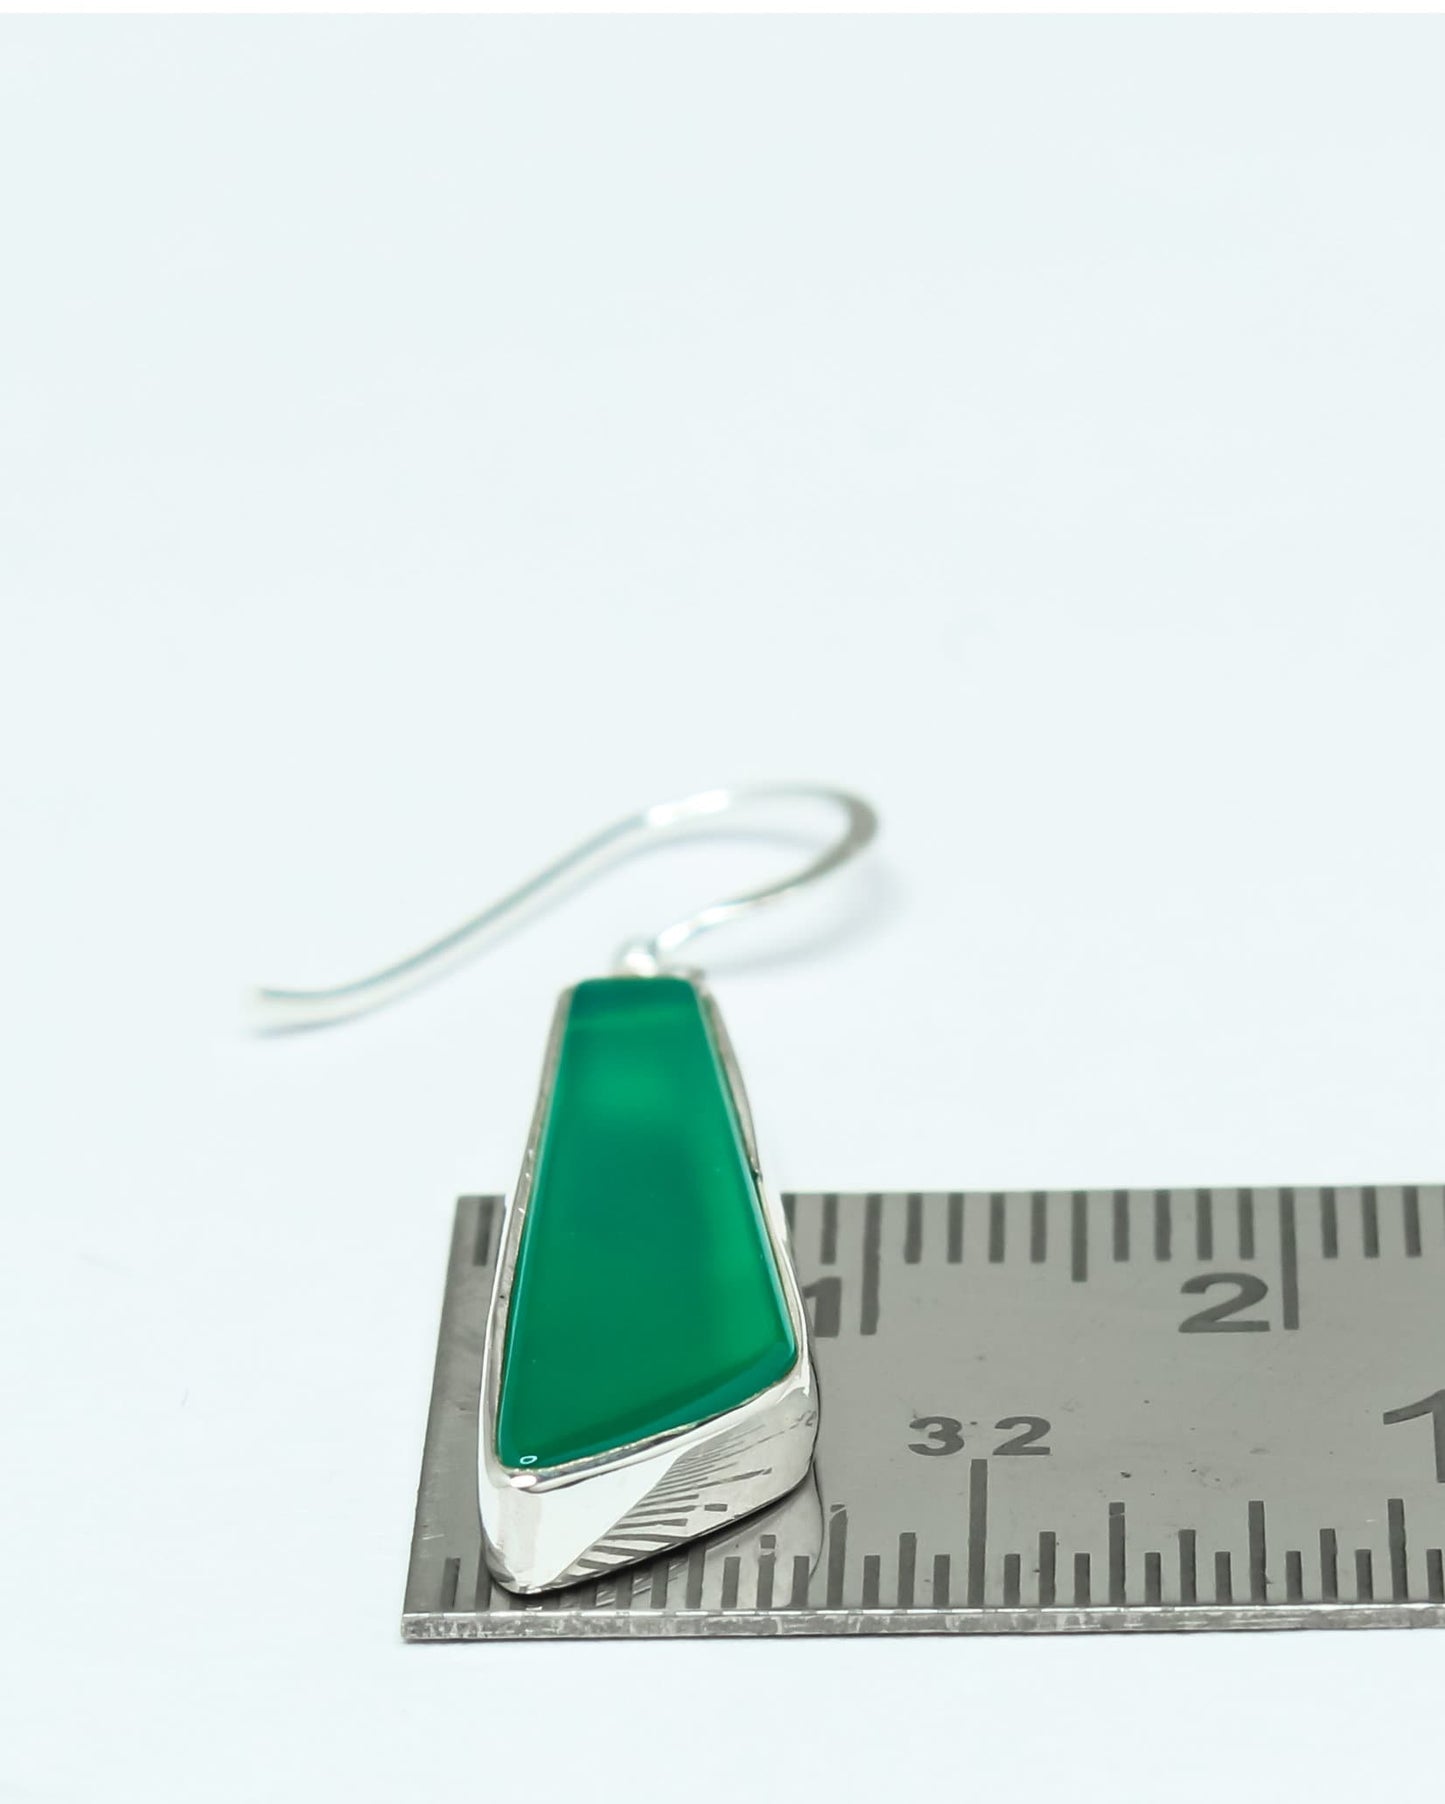 Quadrilateral GREEN ONYX Gems Solid 925 SILVER Minimalist Drop Earrings